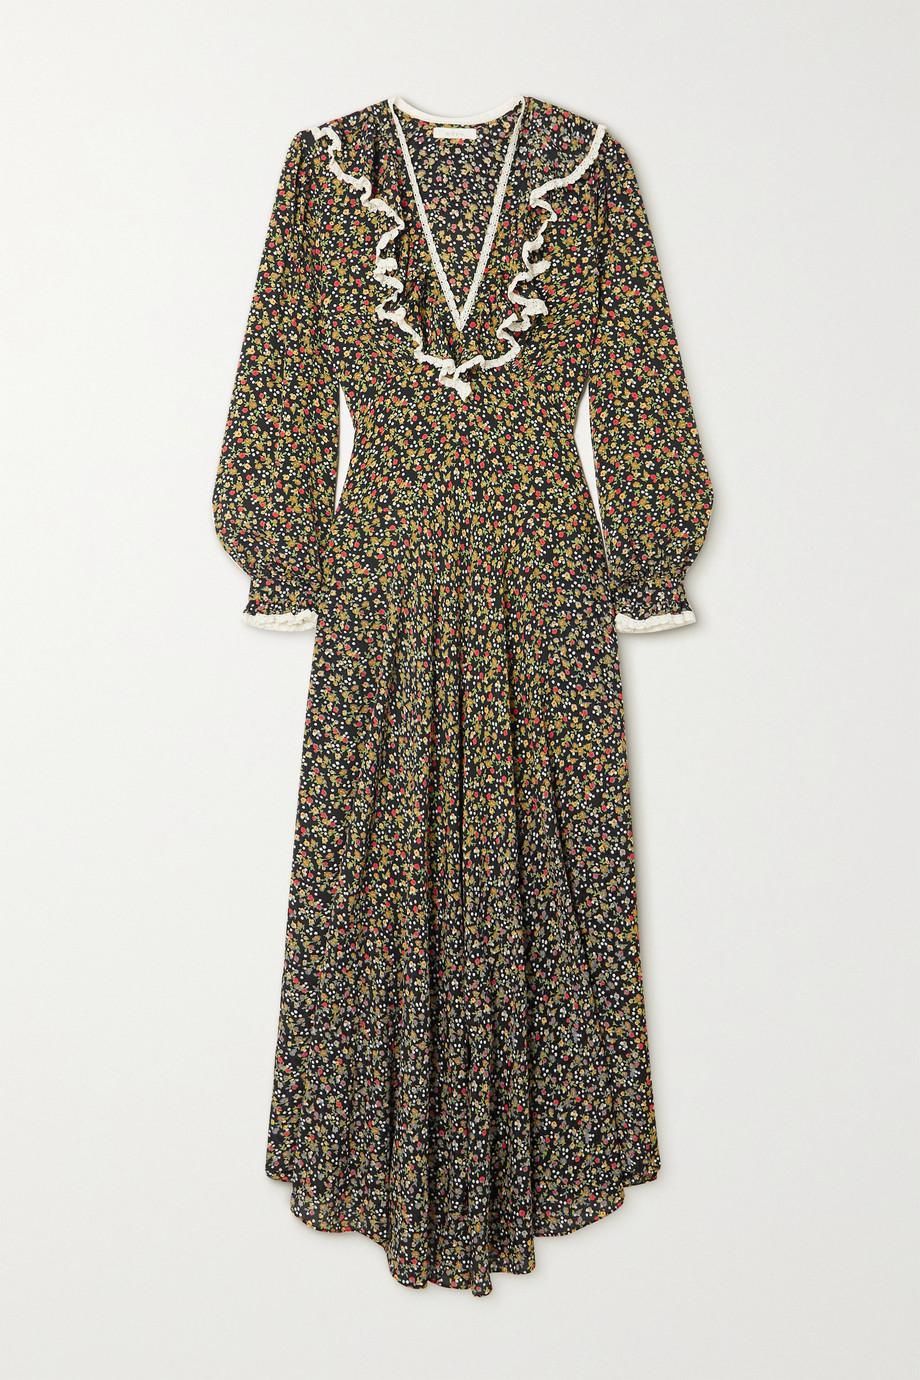 Eugenie Lace-trimmed Floral-print Crepe Dress